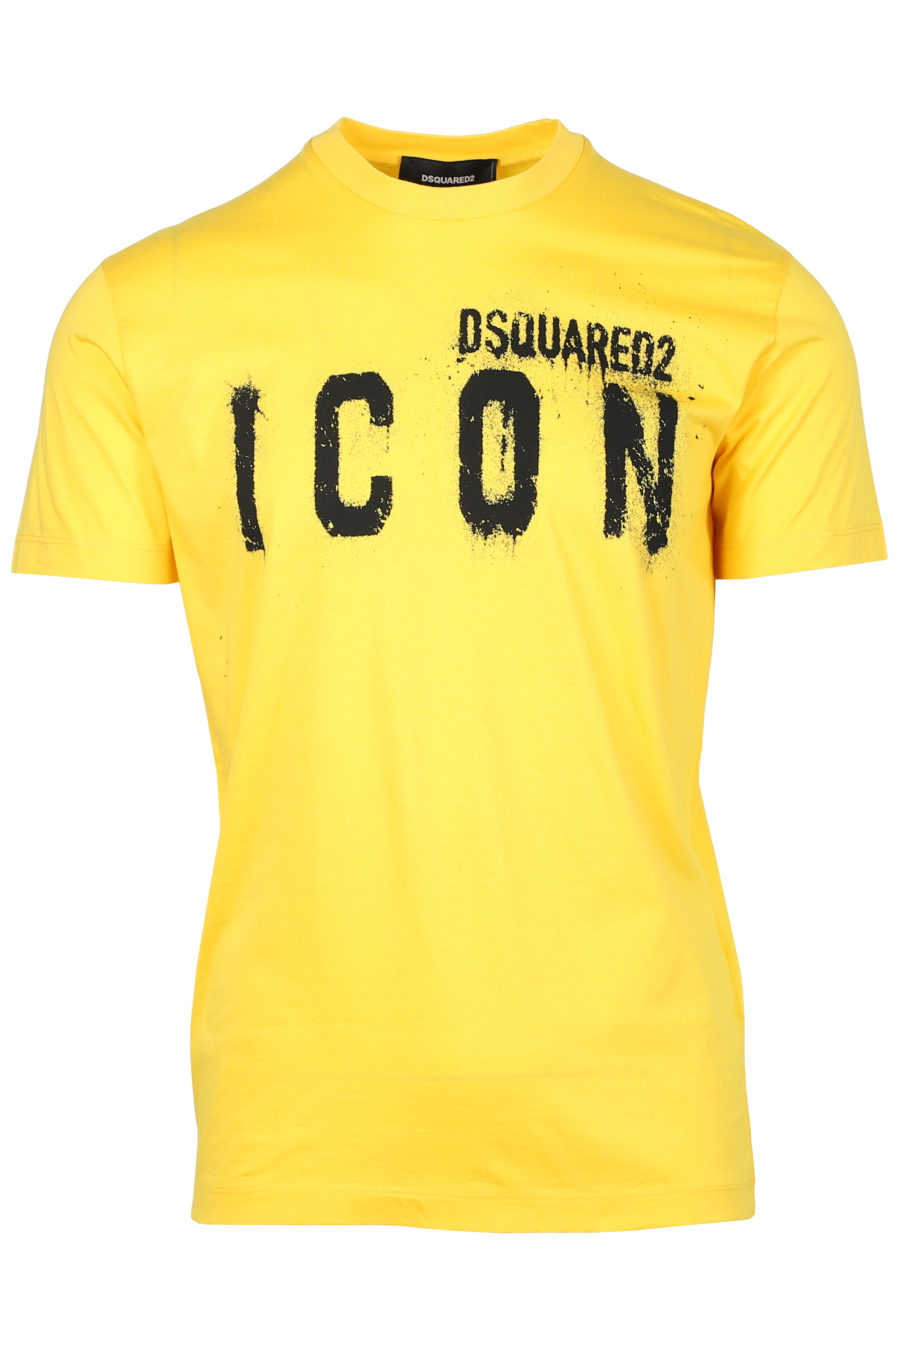 T-shirt amarela com o logótipo "Icon Spray" - IMG 2329